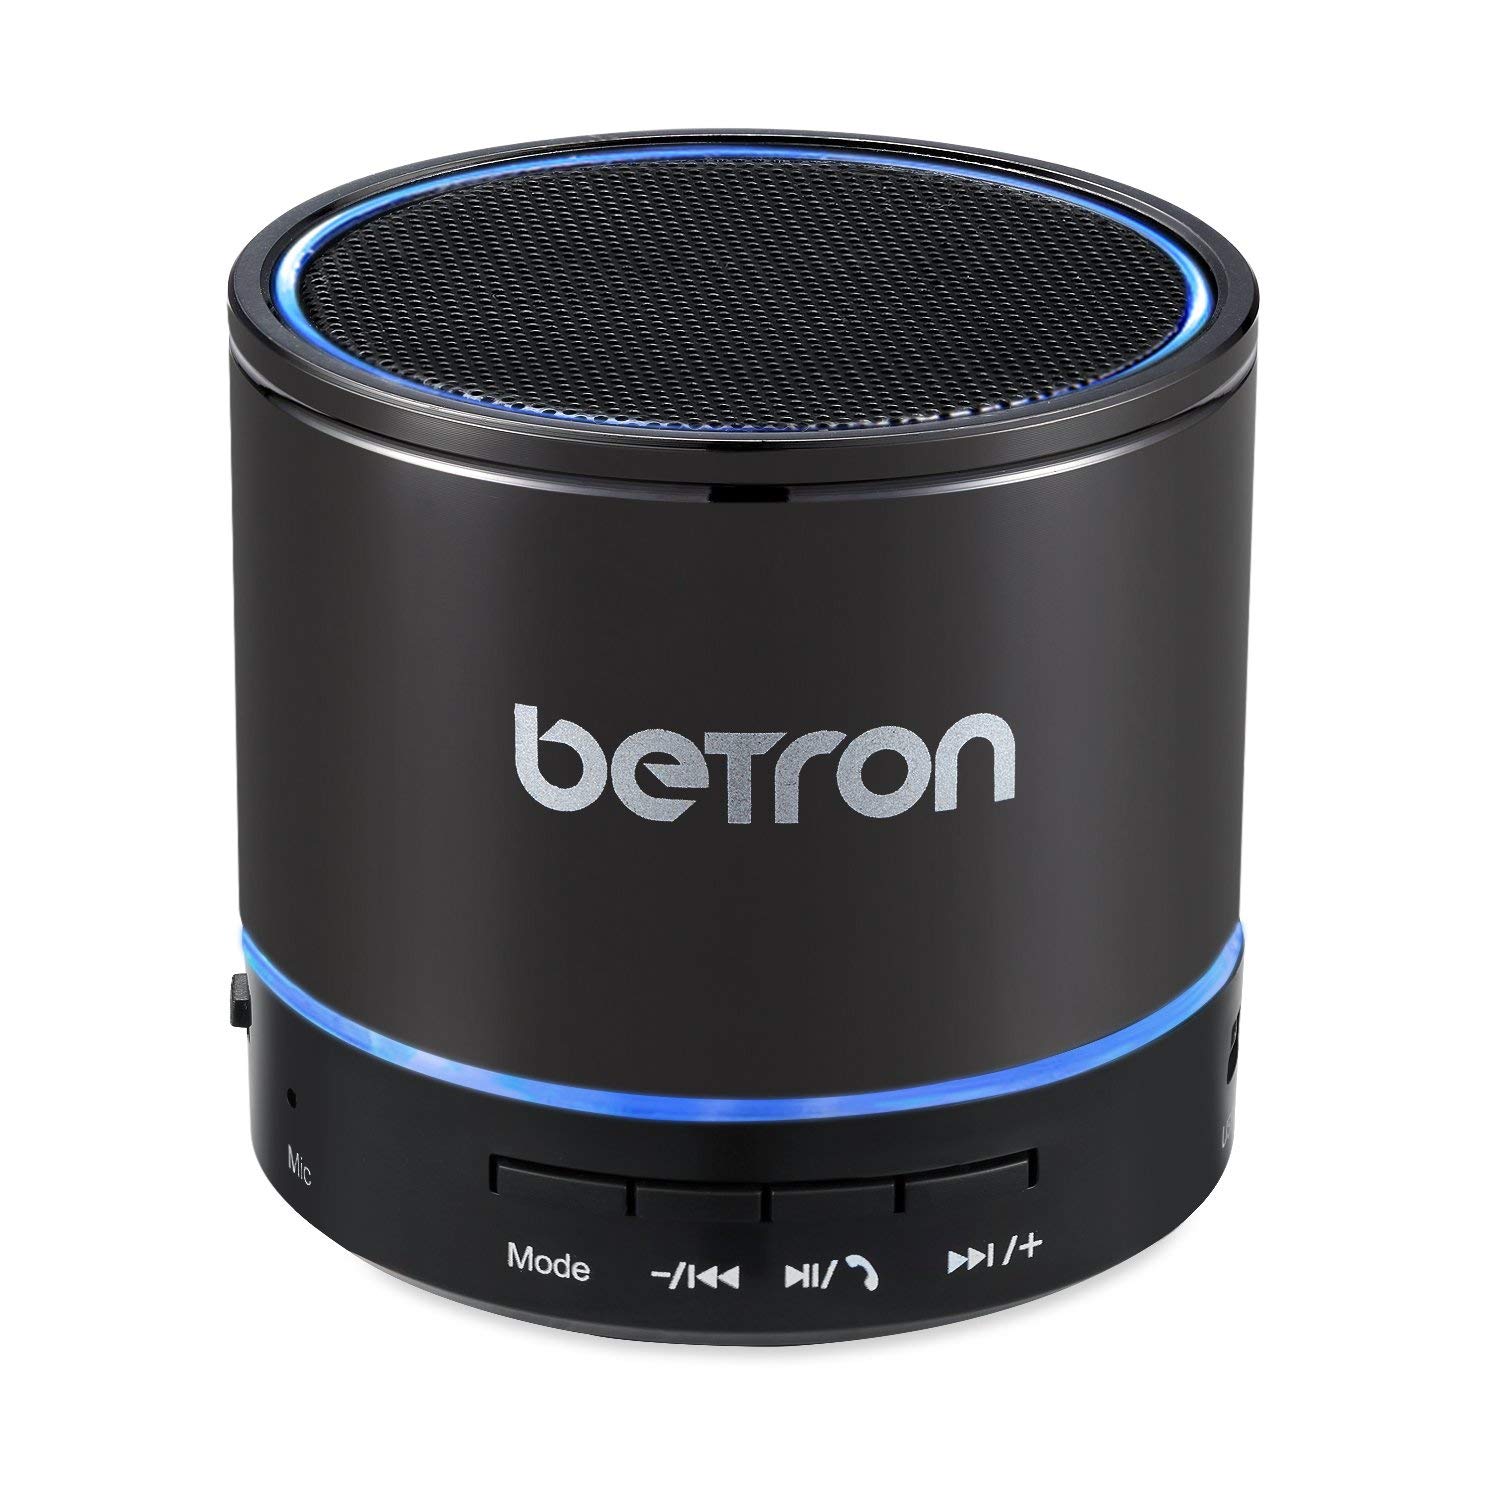 Betron Wireless Portable Bluetooth Speaker